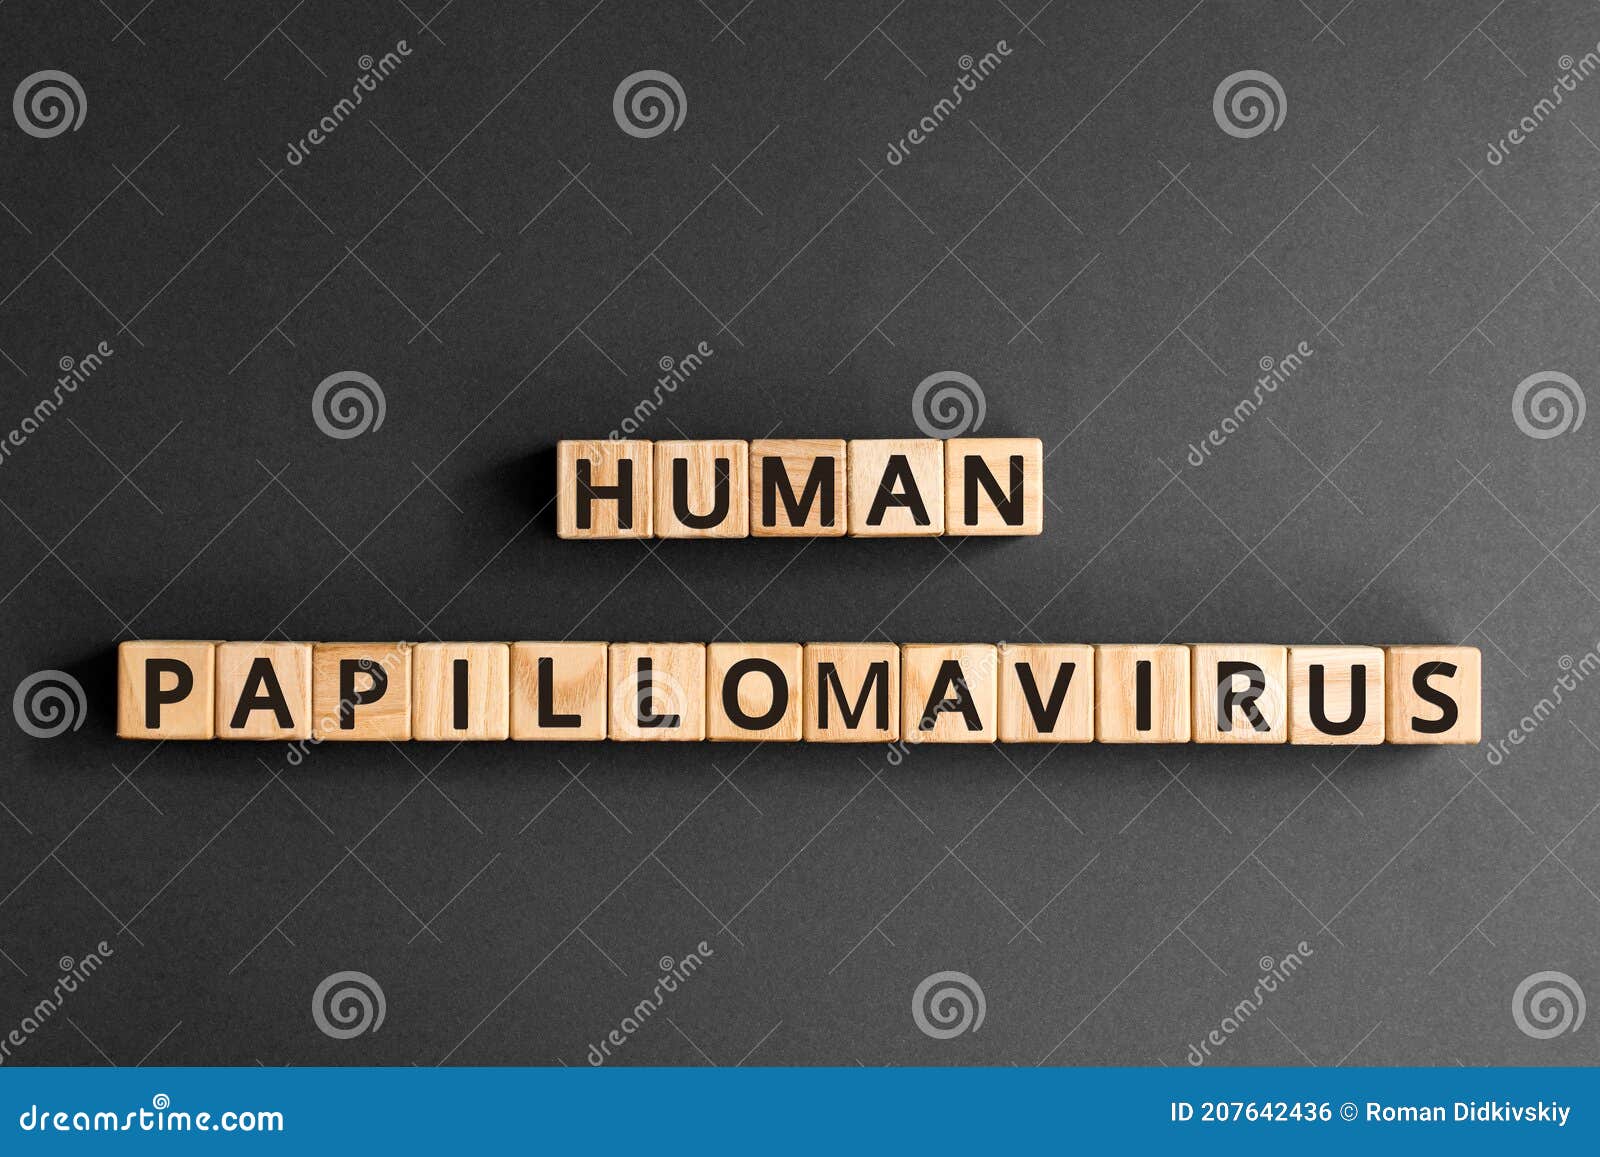 human papillomavirus - word from wooden blocks with letters